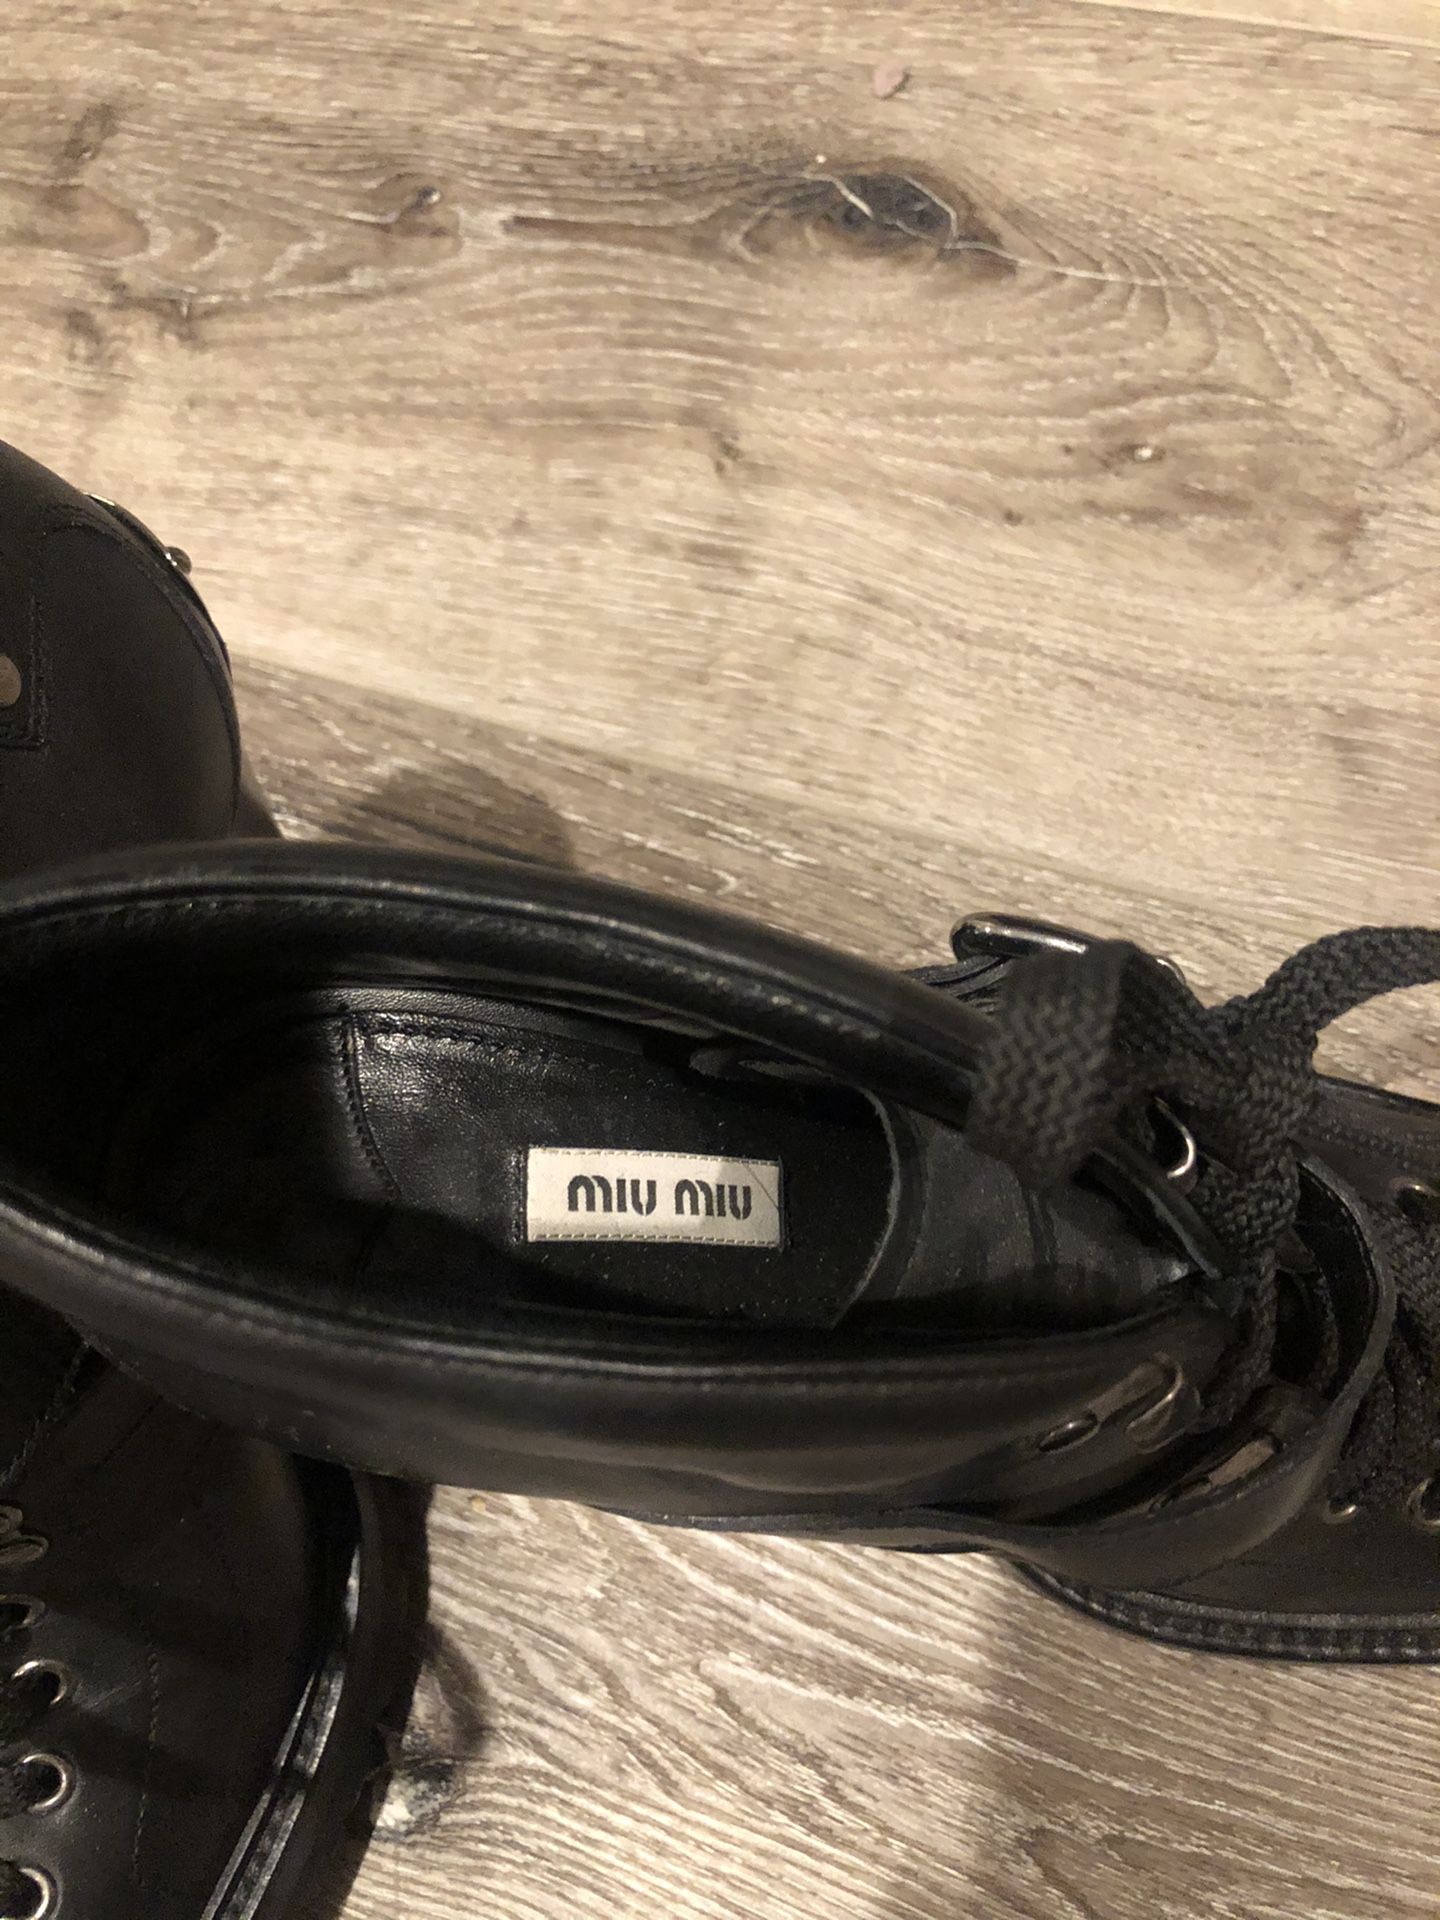 Authentic Miu Miu size 9 black leather booties